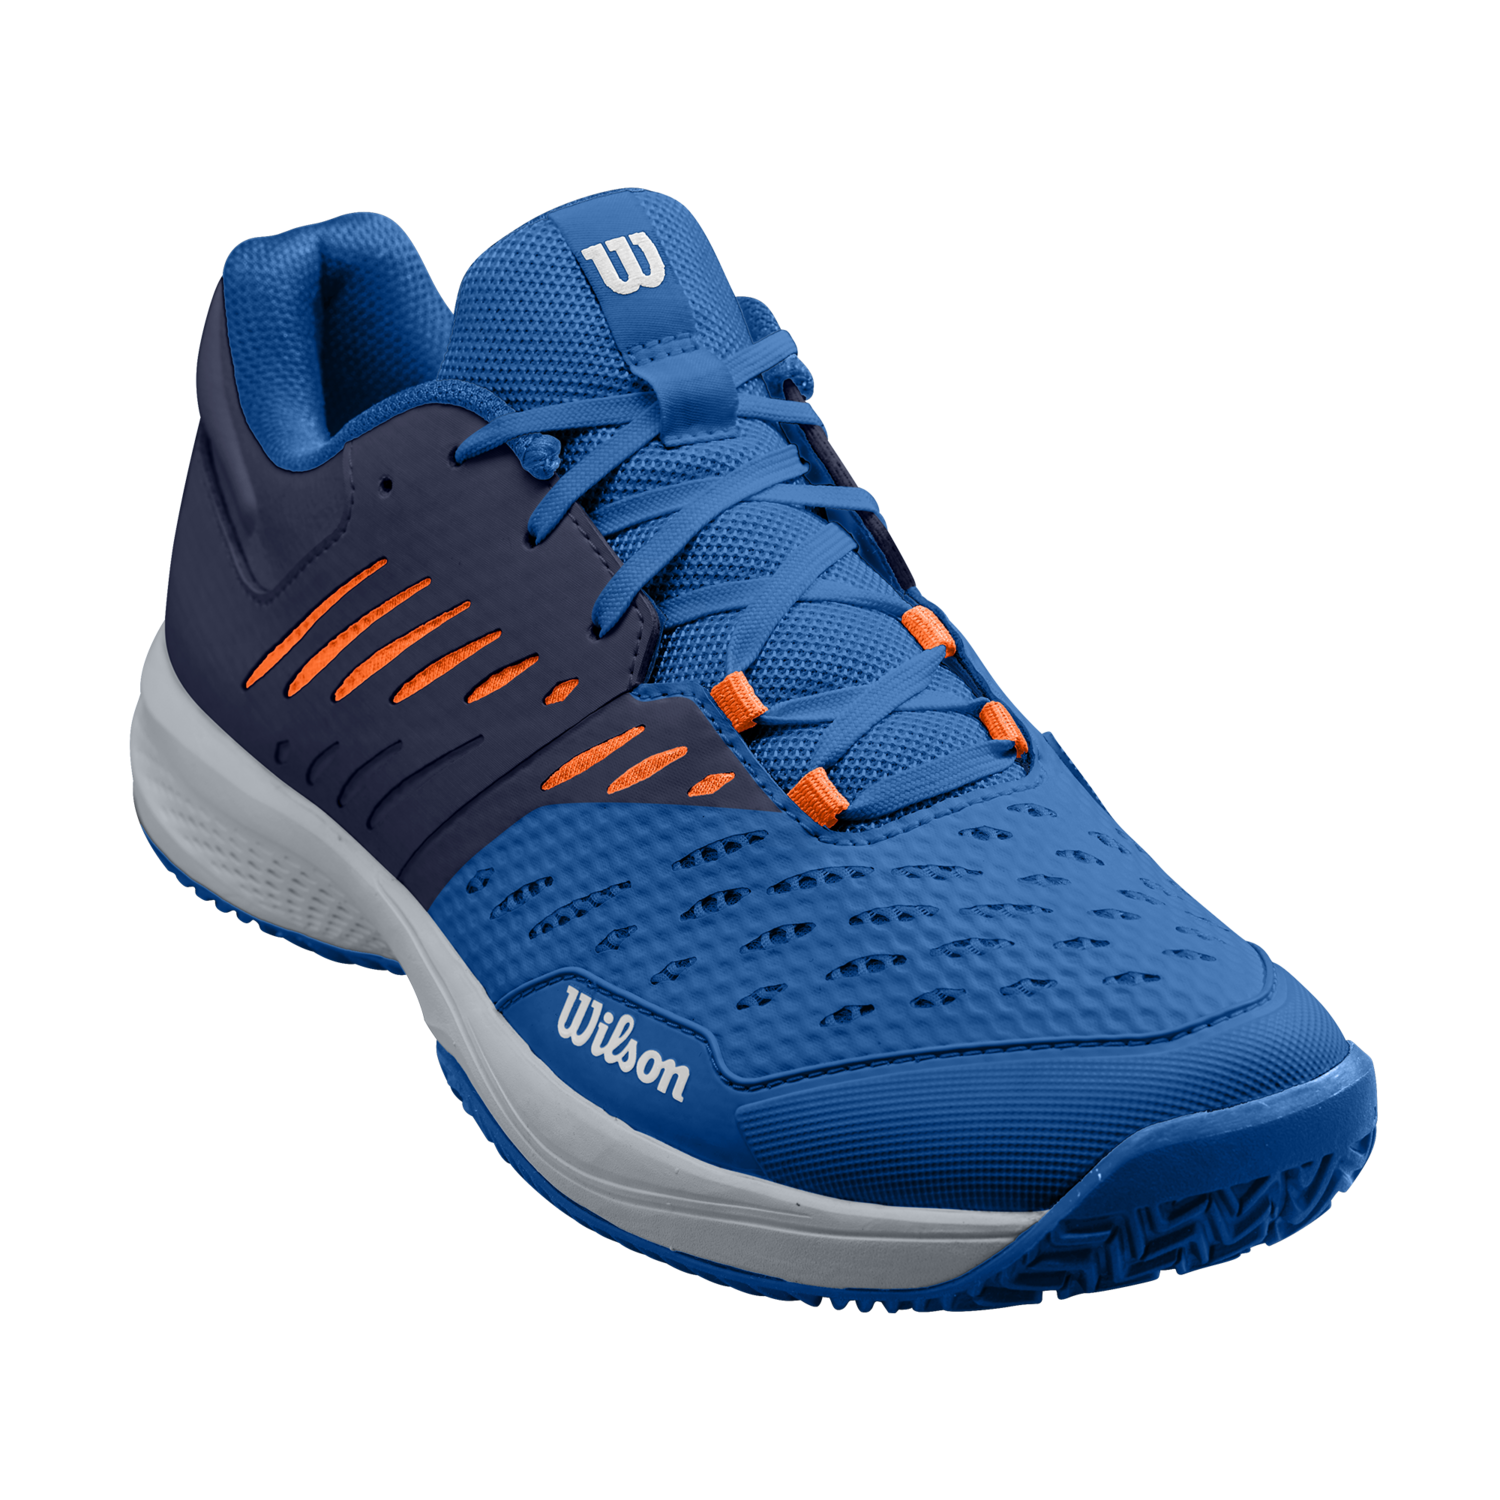 Wilson Kaos Comp 3.0 Men's Tennis Shoes - Blue